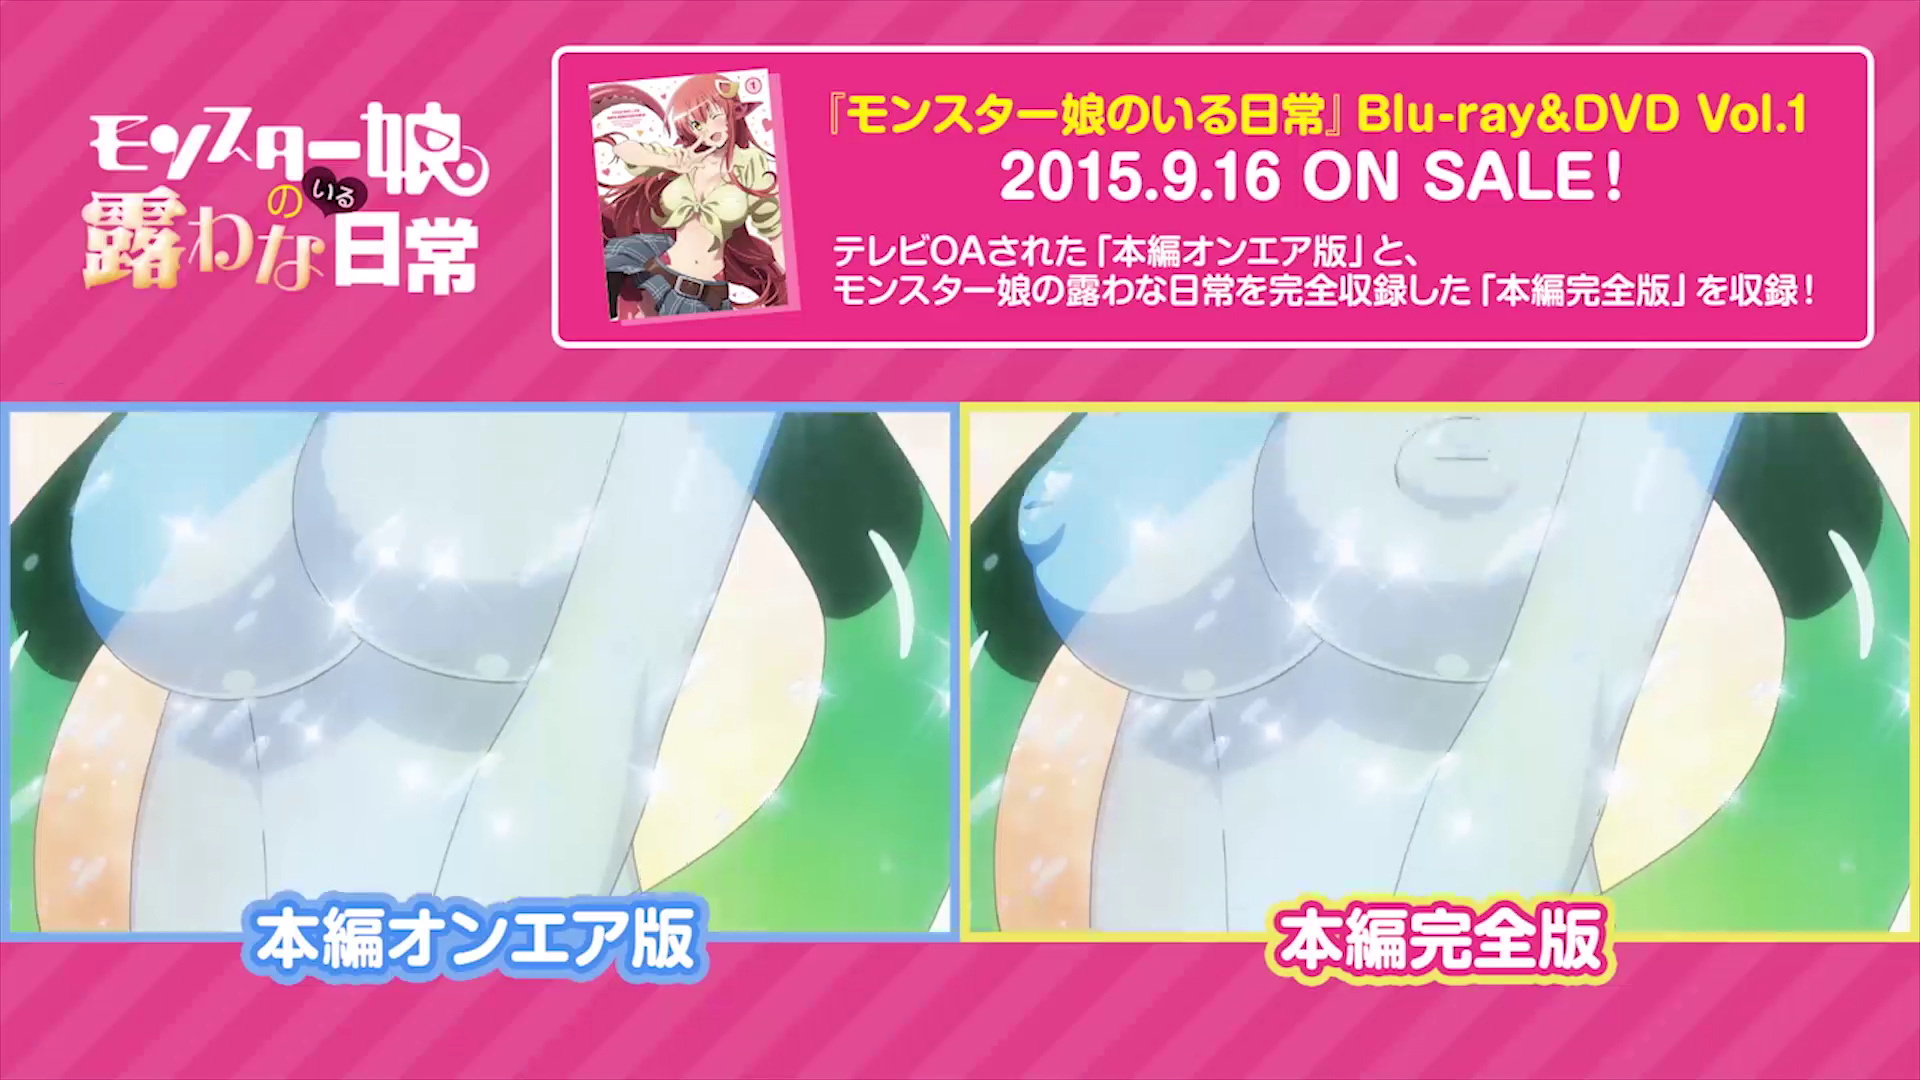 TV vs Blu-Ray Monster Musume anime blu-ray volume 1 uncensored 7